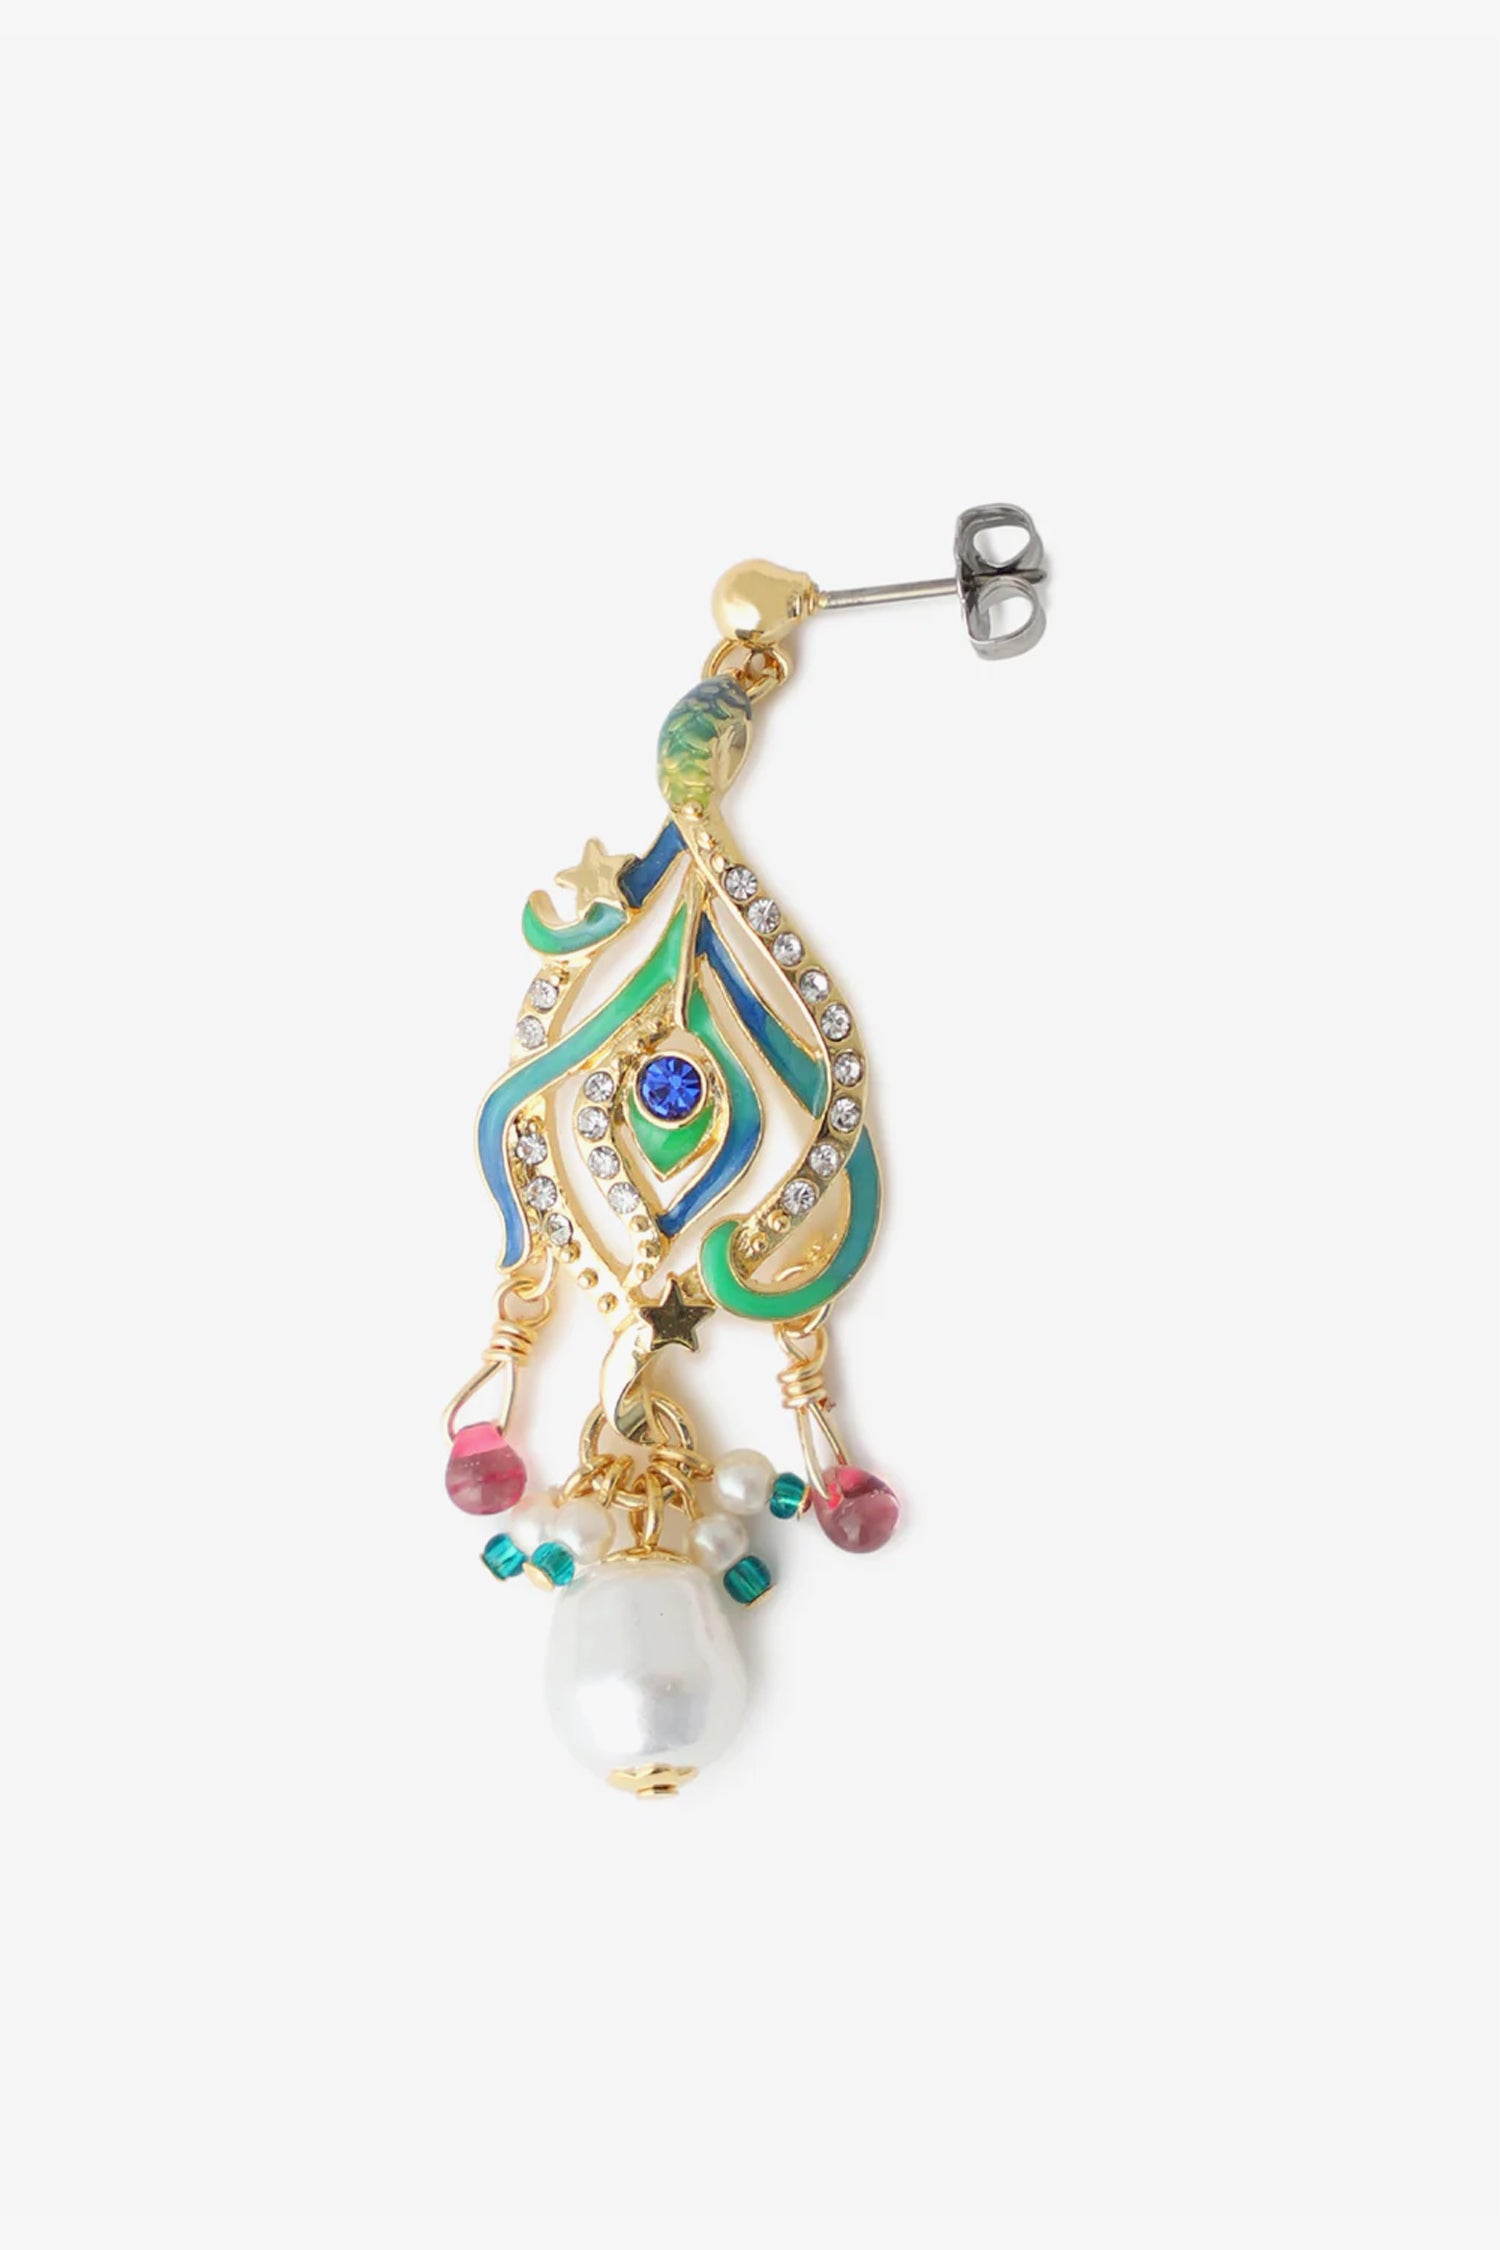 Multi-stoned and enamel earrings with drop pearl bead, elegant Peacock Feather Earrings, green/gold, Earring Backs to lock